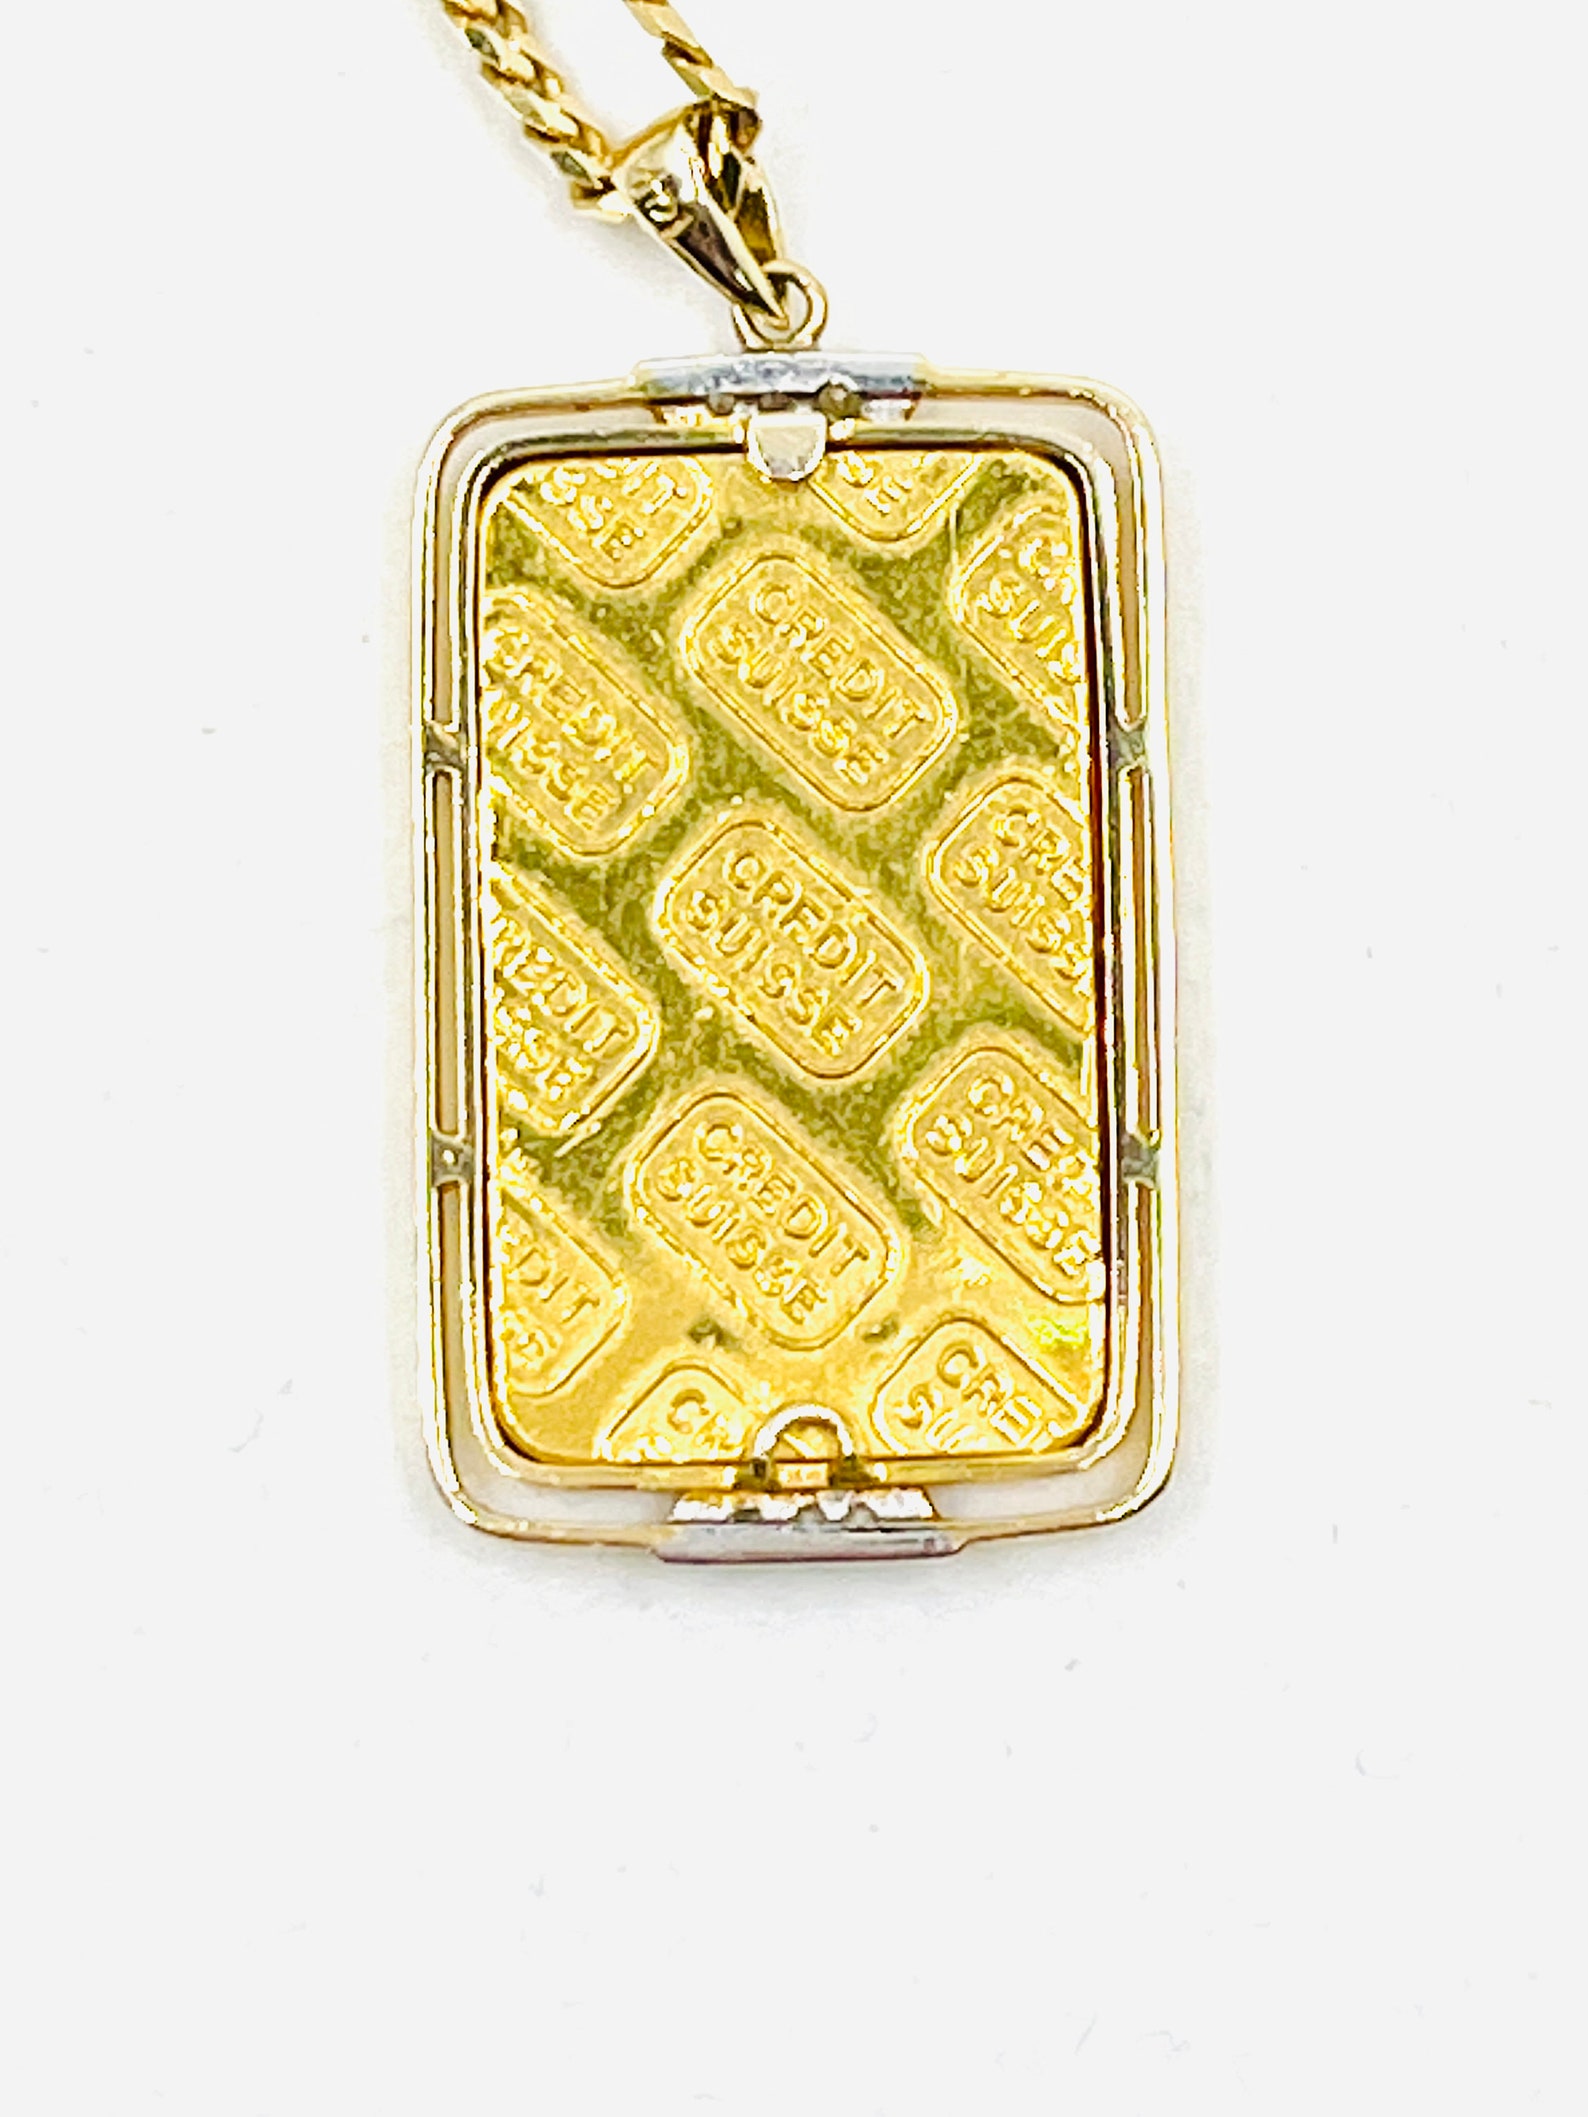 24K Yellow Gold 10 Gram Credit Suisse Bar Pendant Necklace - Etsy